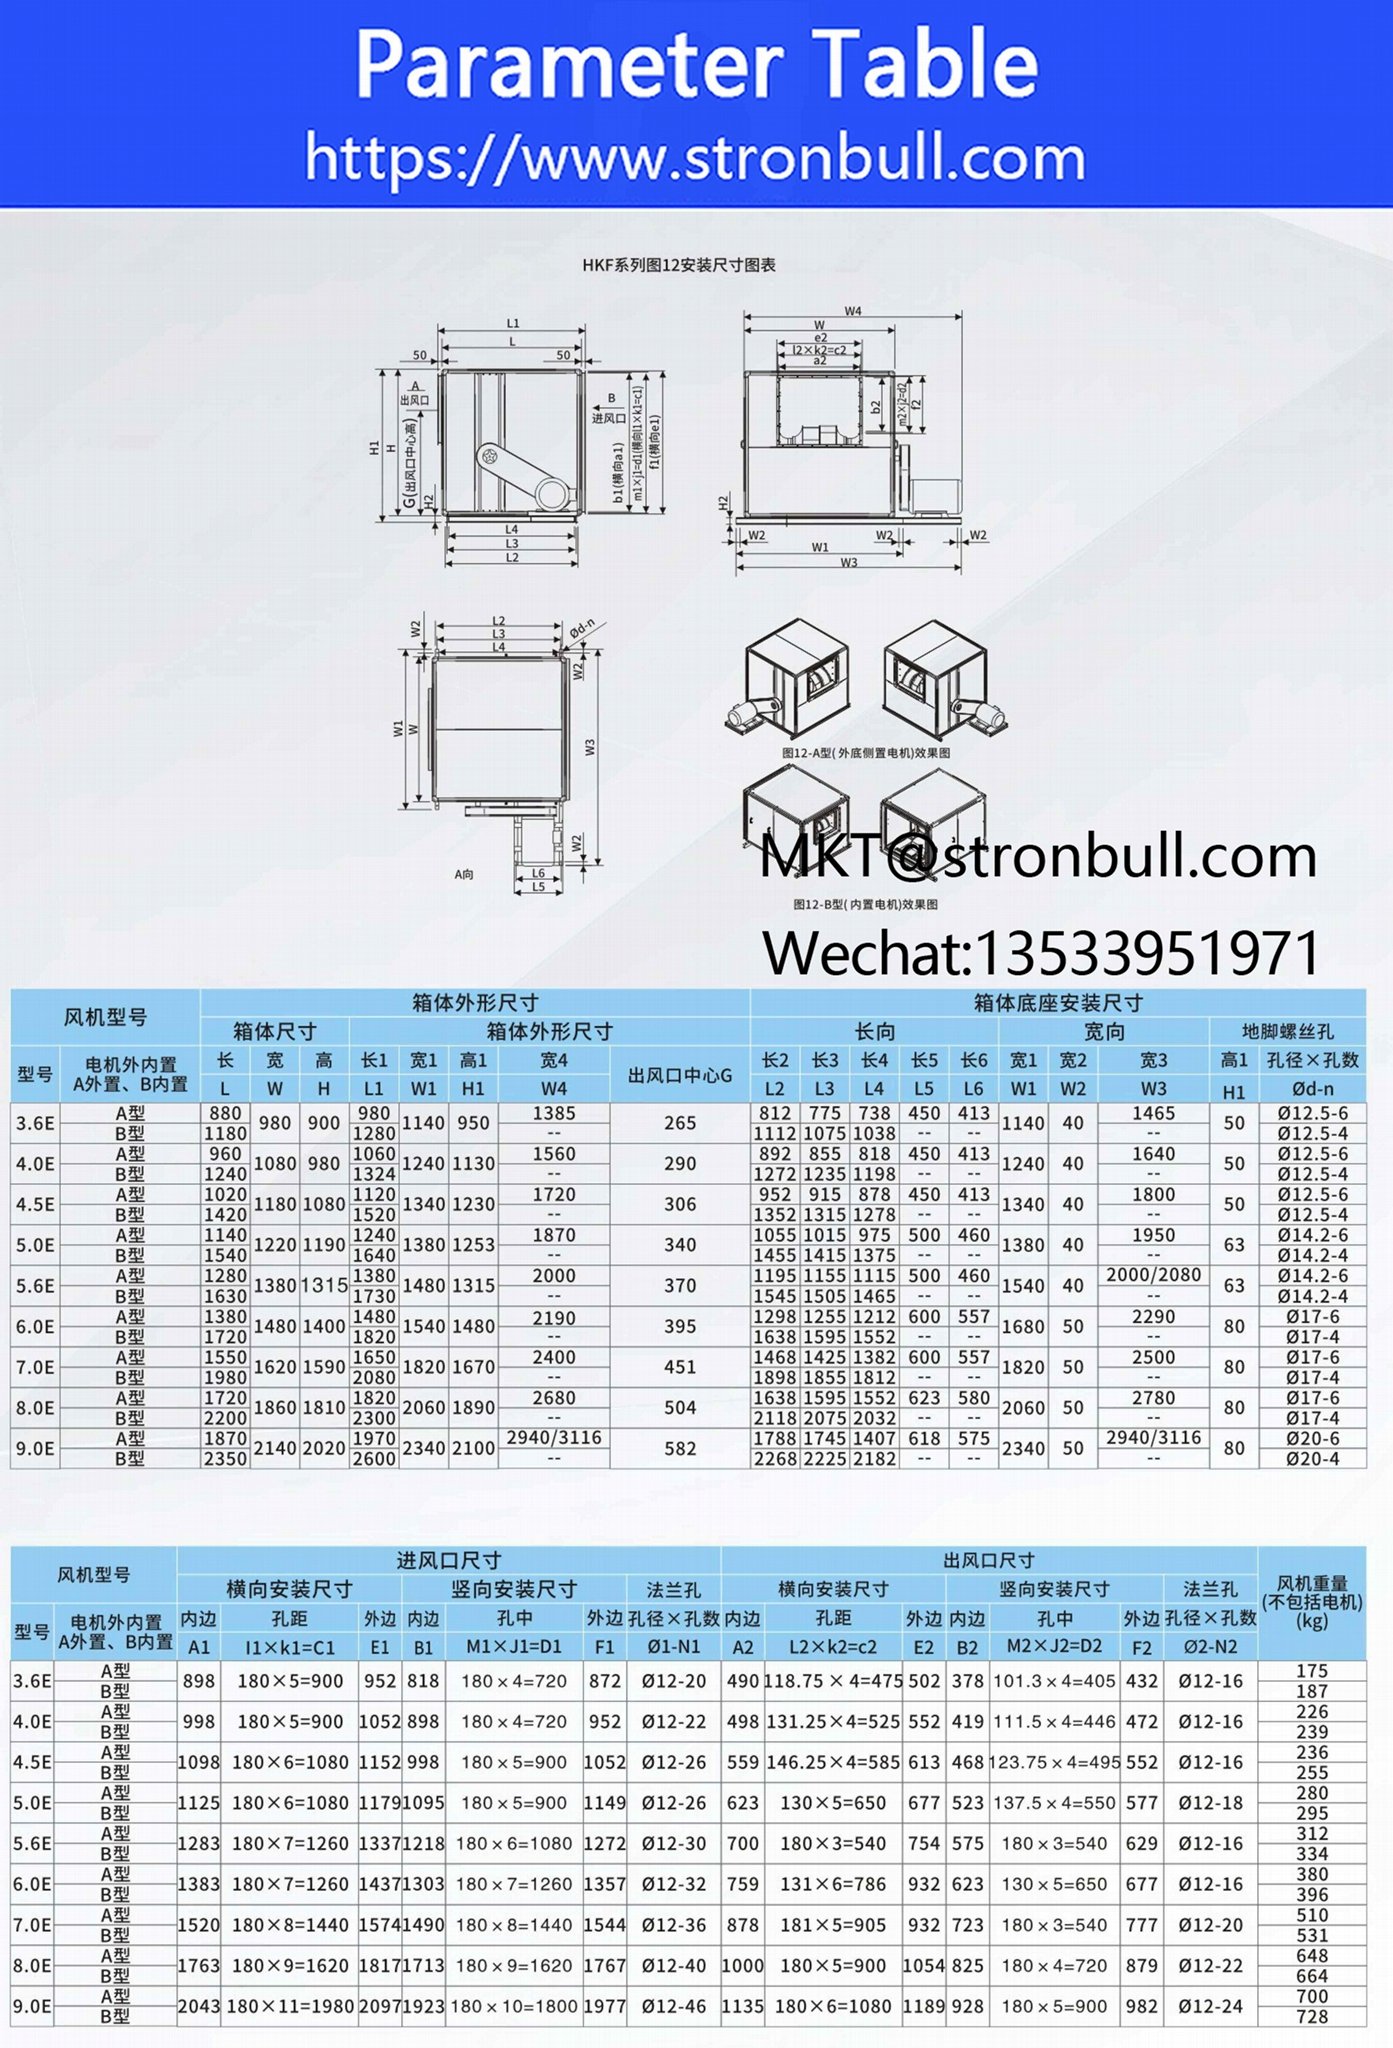 Stronbull Box Industrial centrifugal fan HKF 3